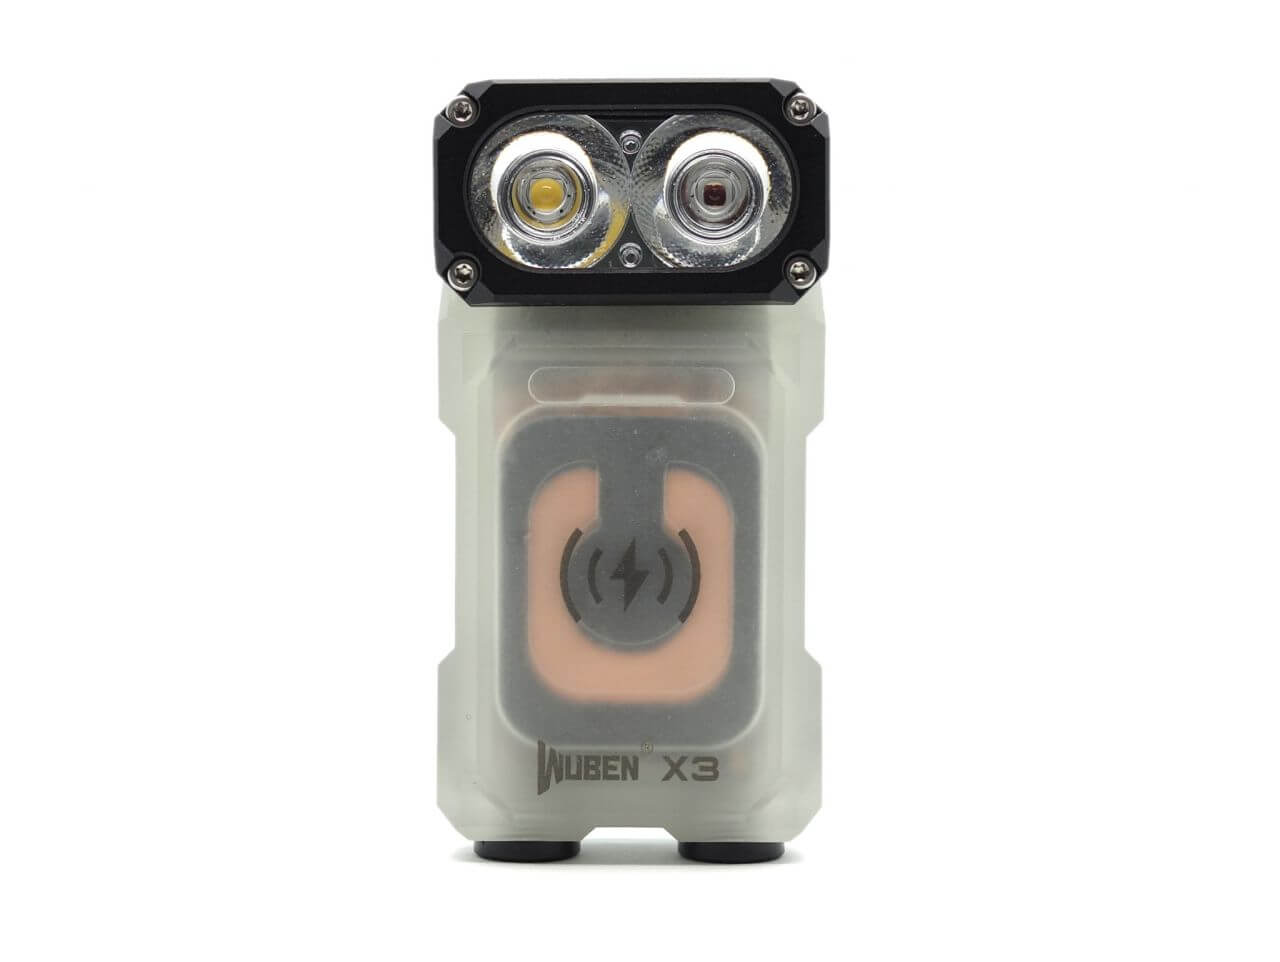 Wuben X3 Review  Your own pocket owl : r/flashlight